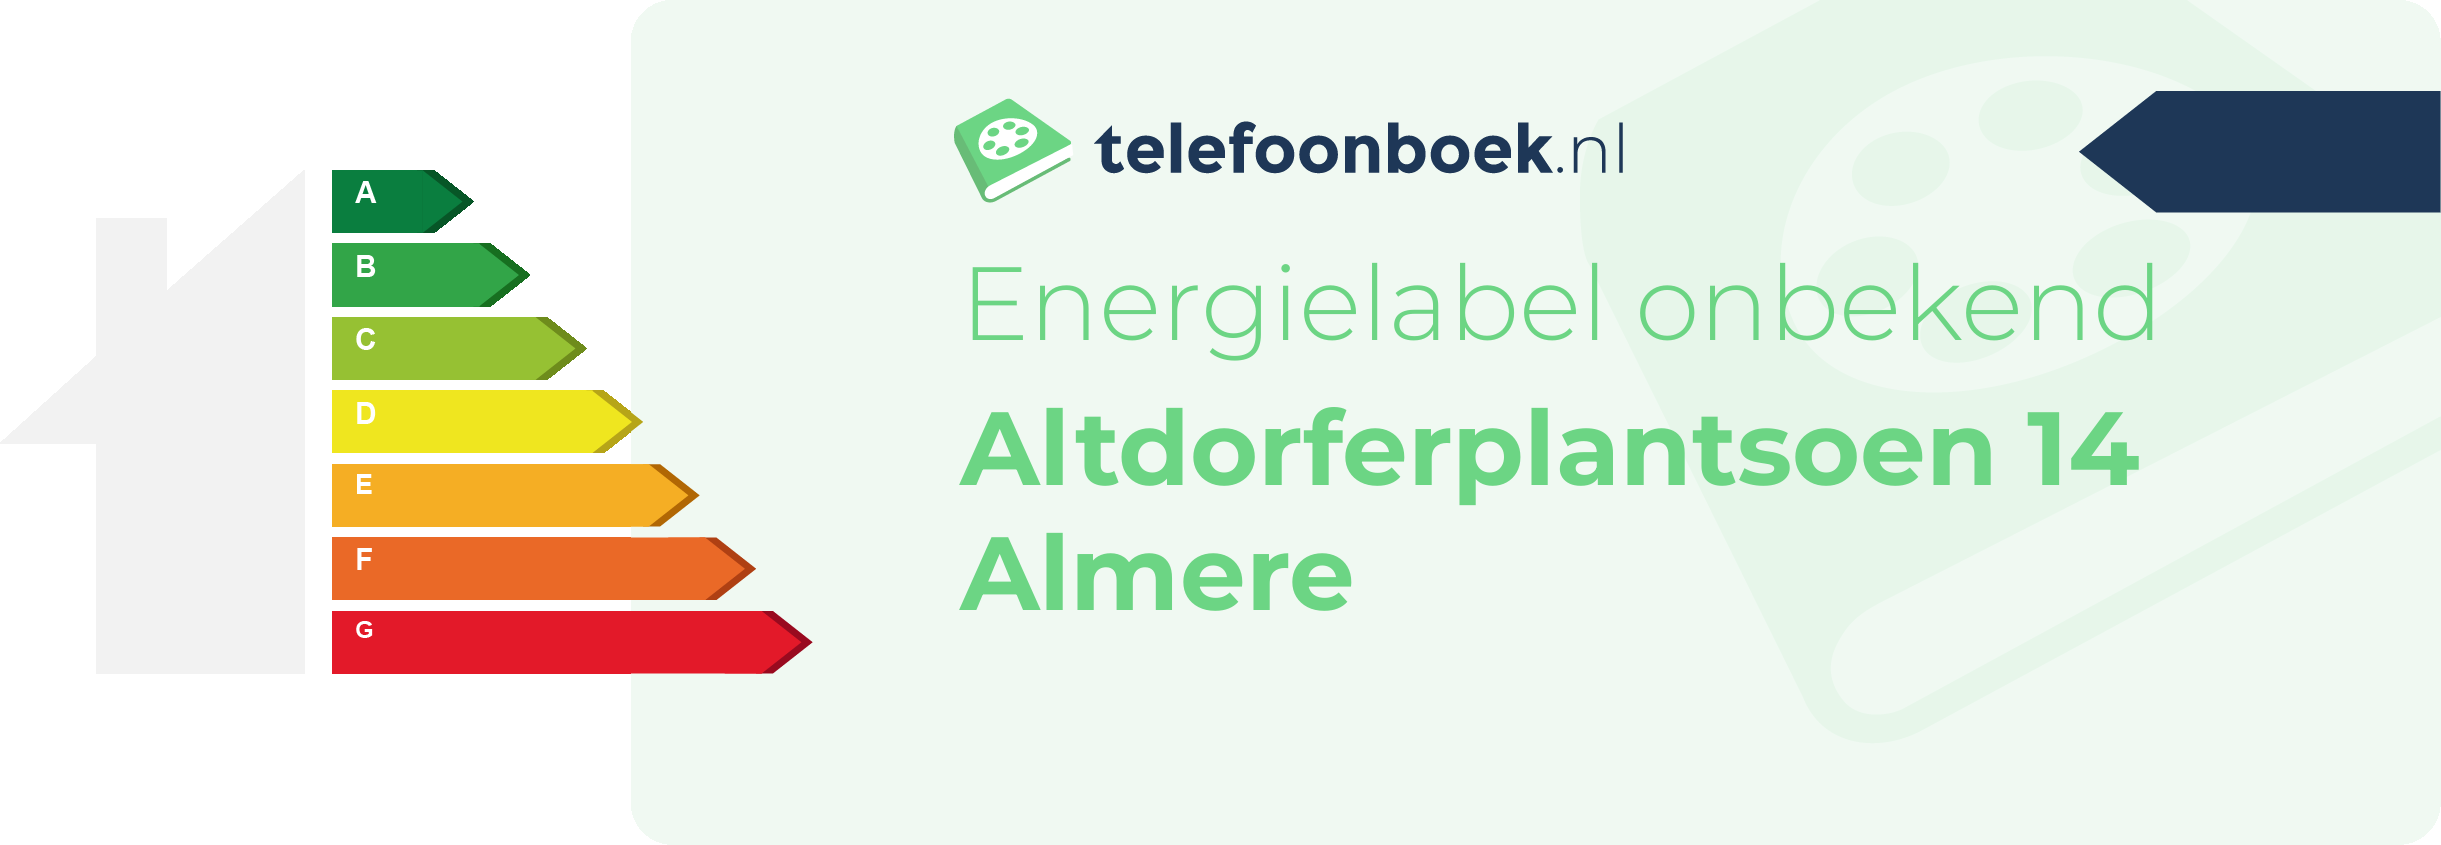 Energielabel Altdorferplantsoen 14 Almere